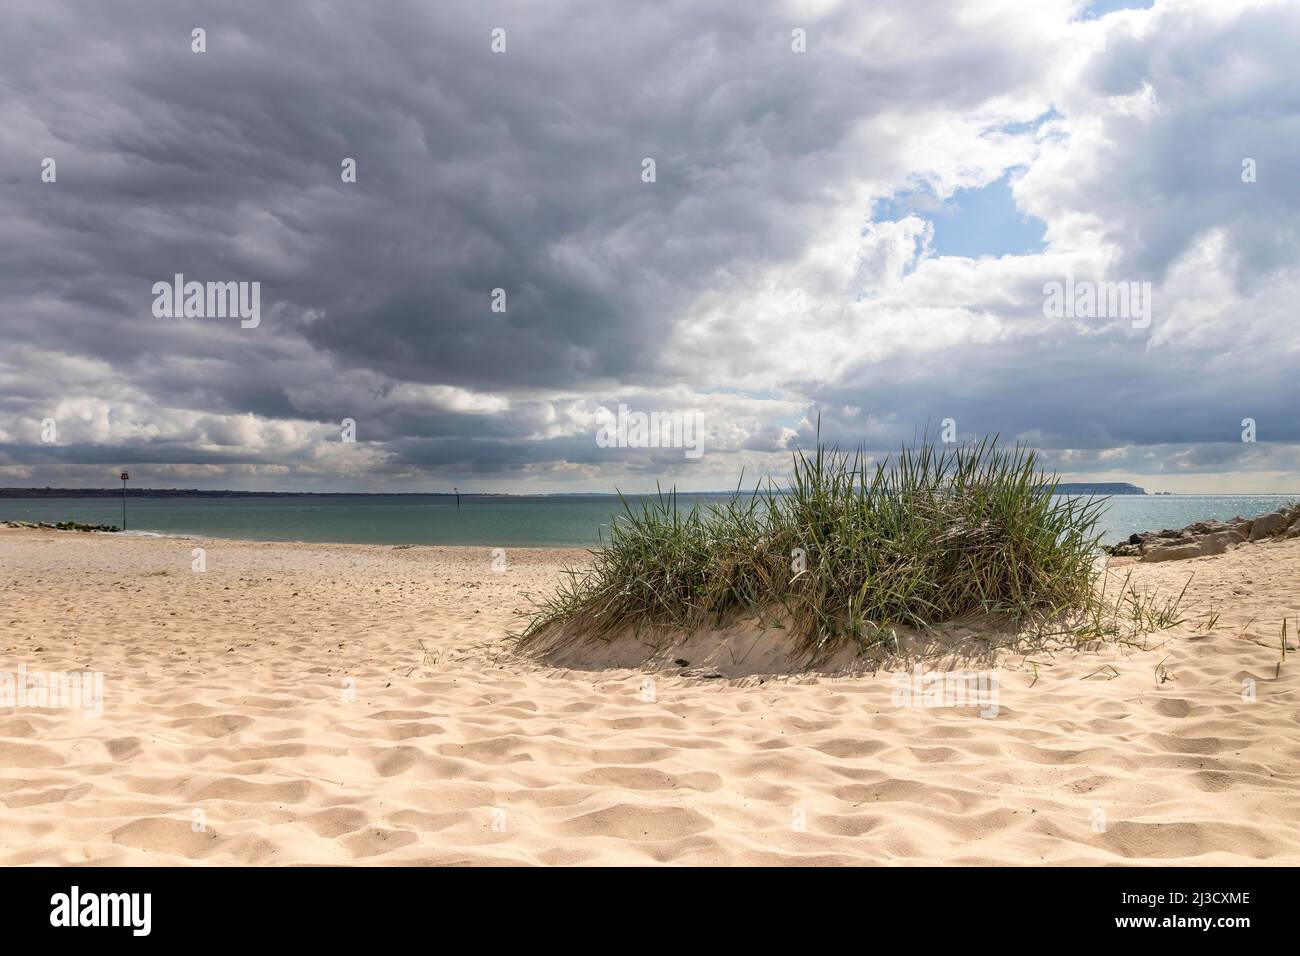 Dramatic Sky and sandy beach at Mudeford Spit, Dorset, England UK Stock Photo